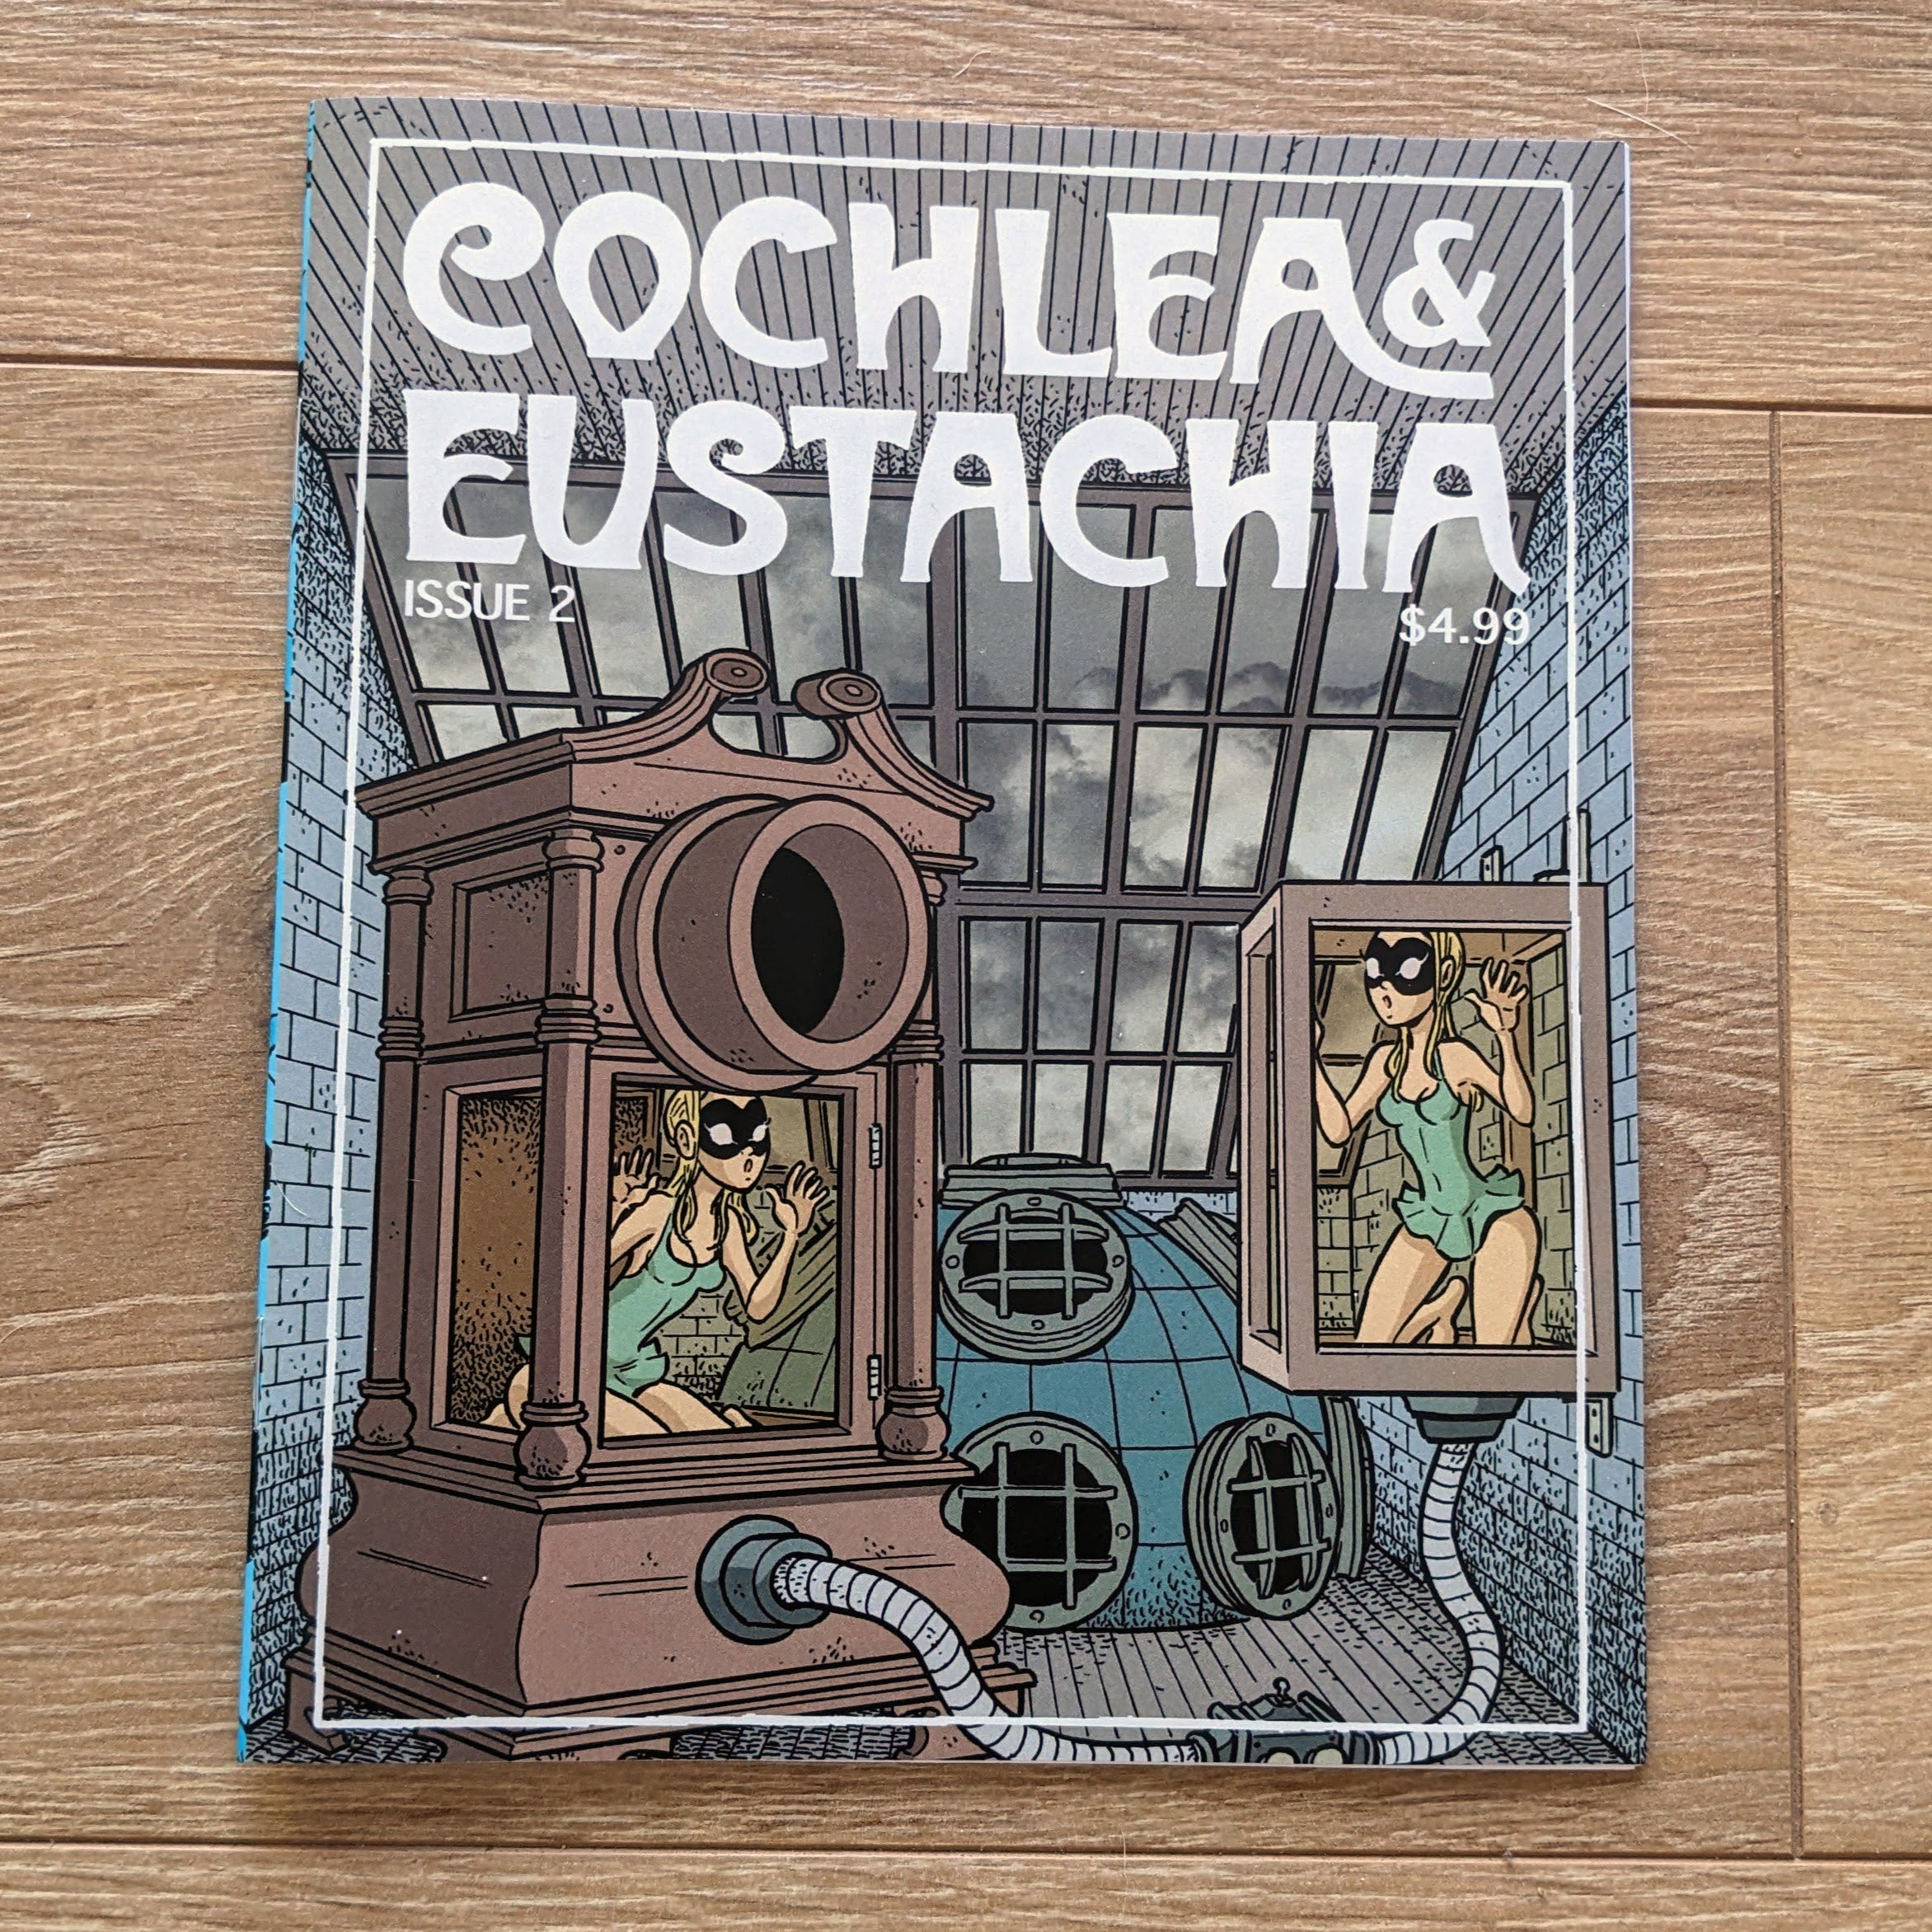 Cochlea and Eustachia Art Book 